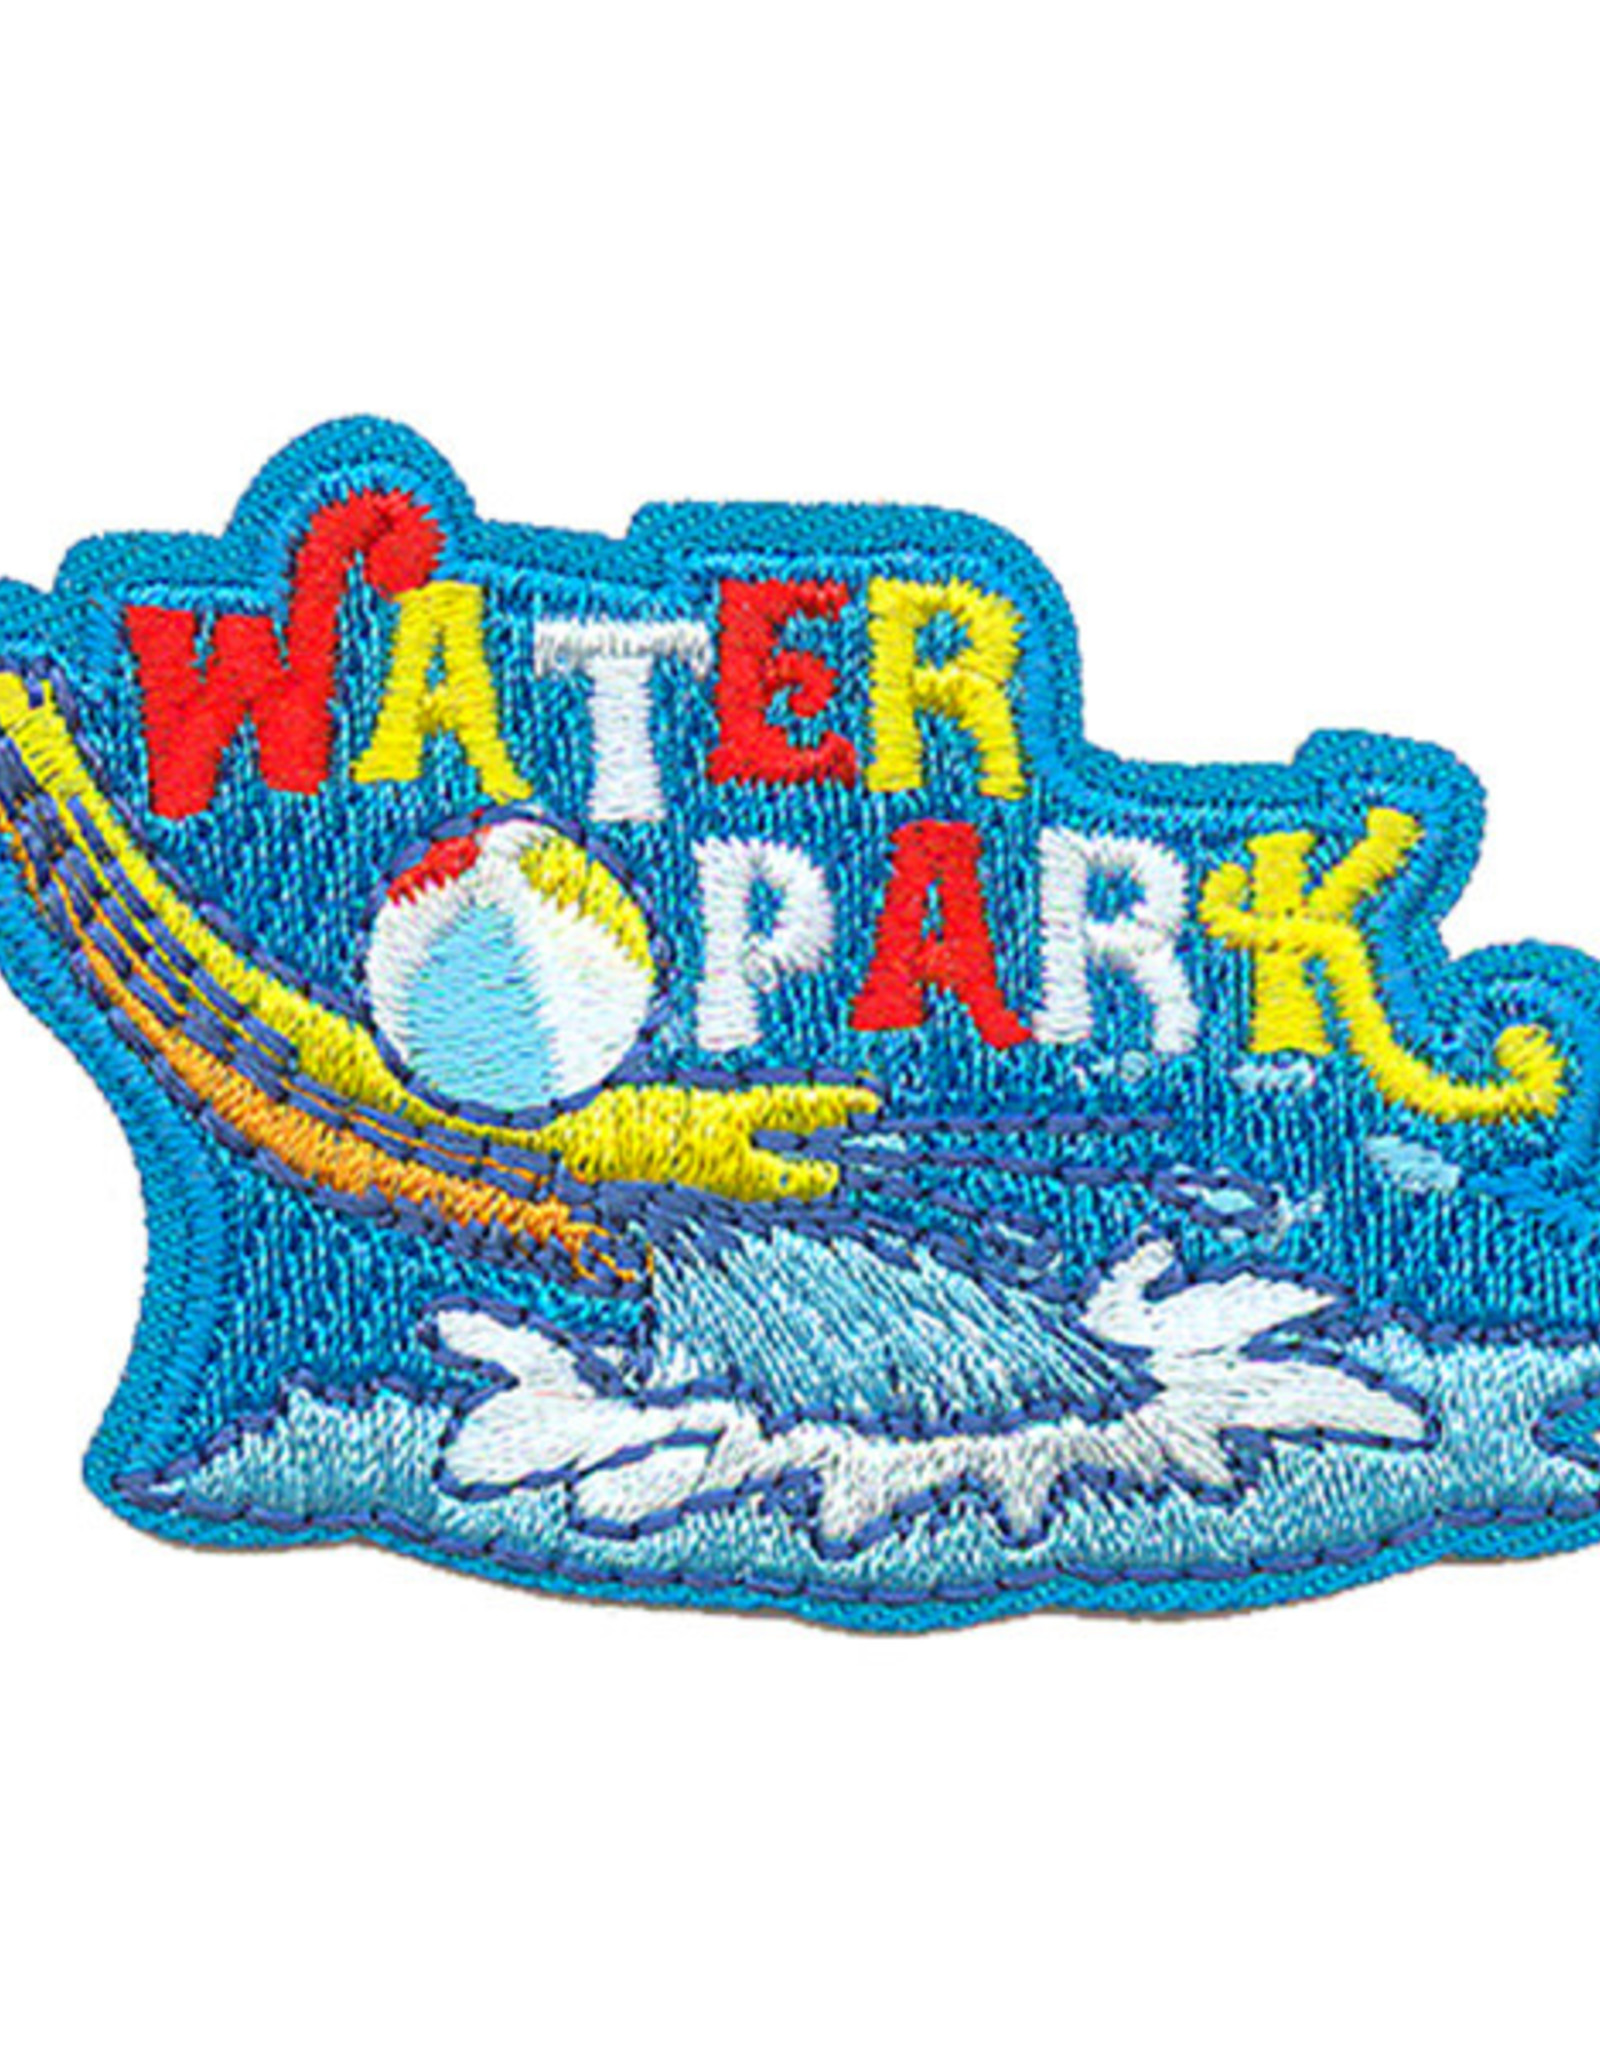 Advantage Emblem & Screen Prnt Water Park Fun Patch